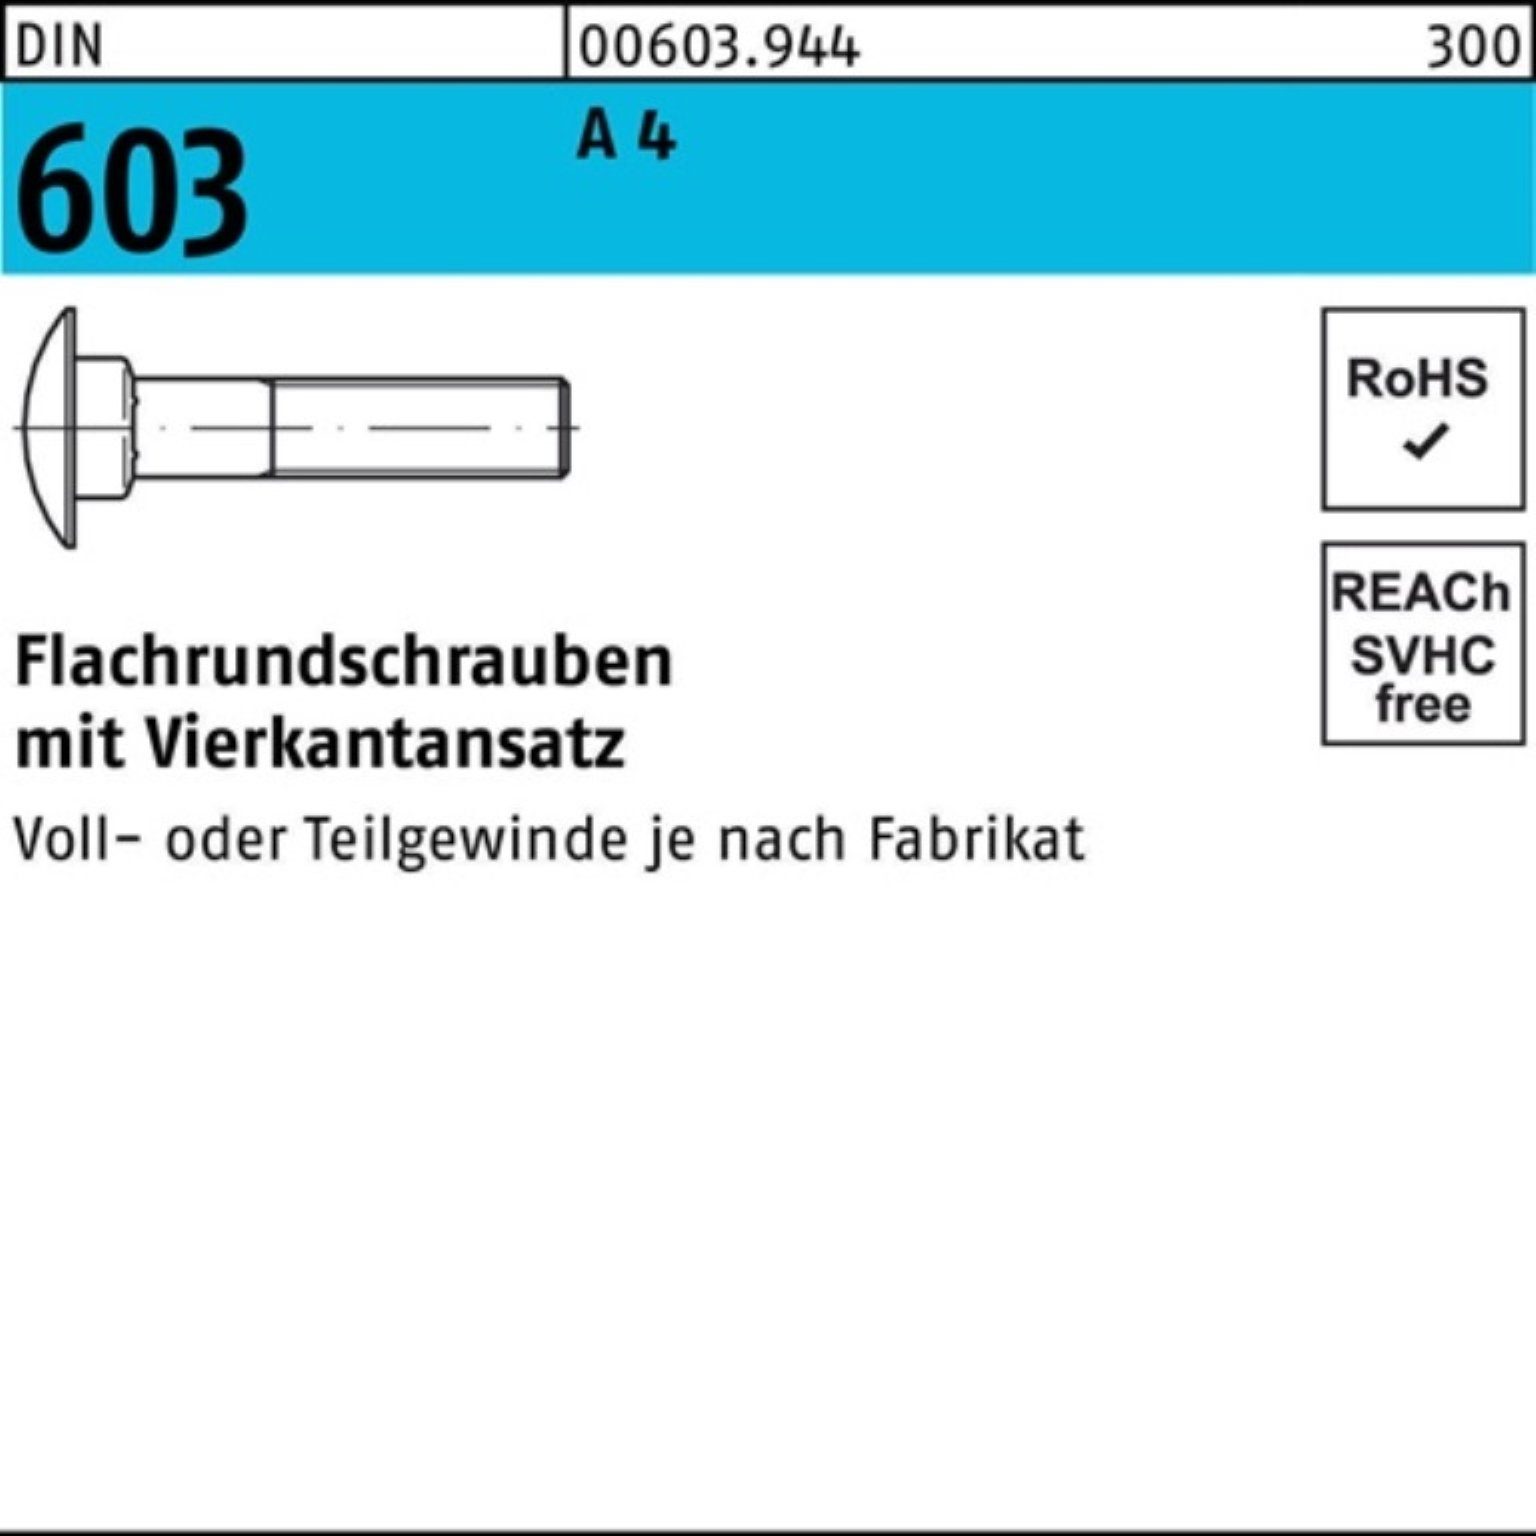 Reyher Schraube 100er Pack Flachrundschraube DIN 603 Vierkantansatz M6x 100 A 4 10 St